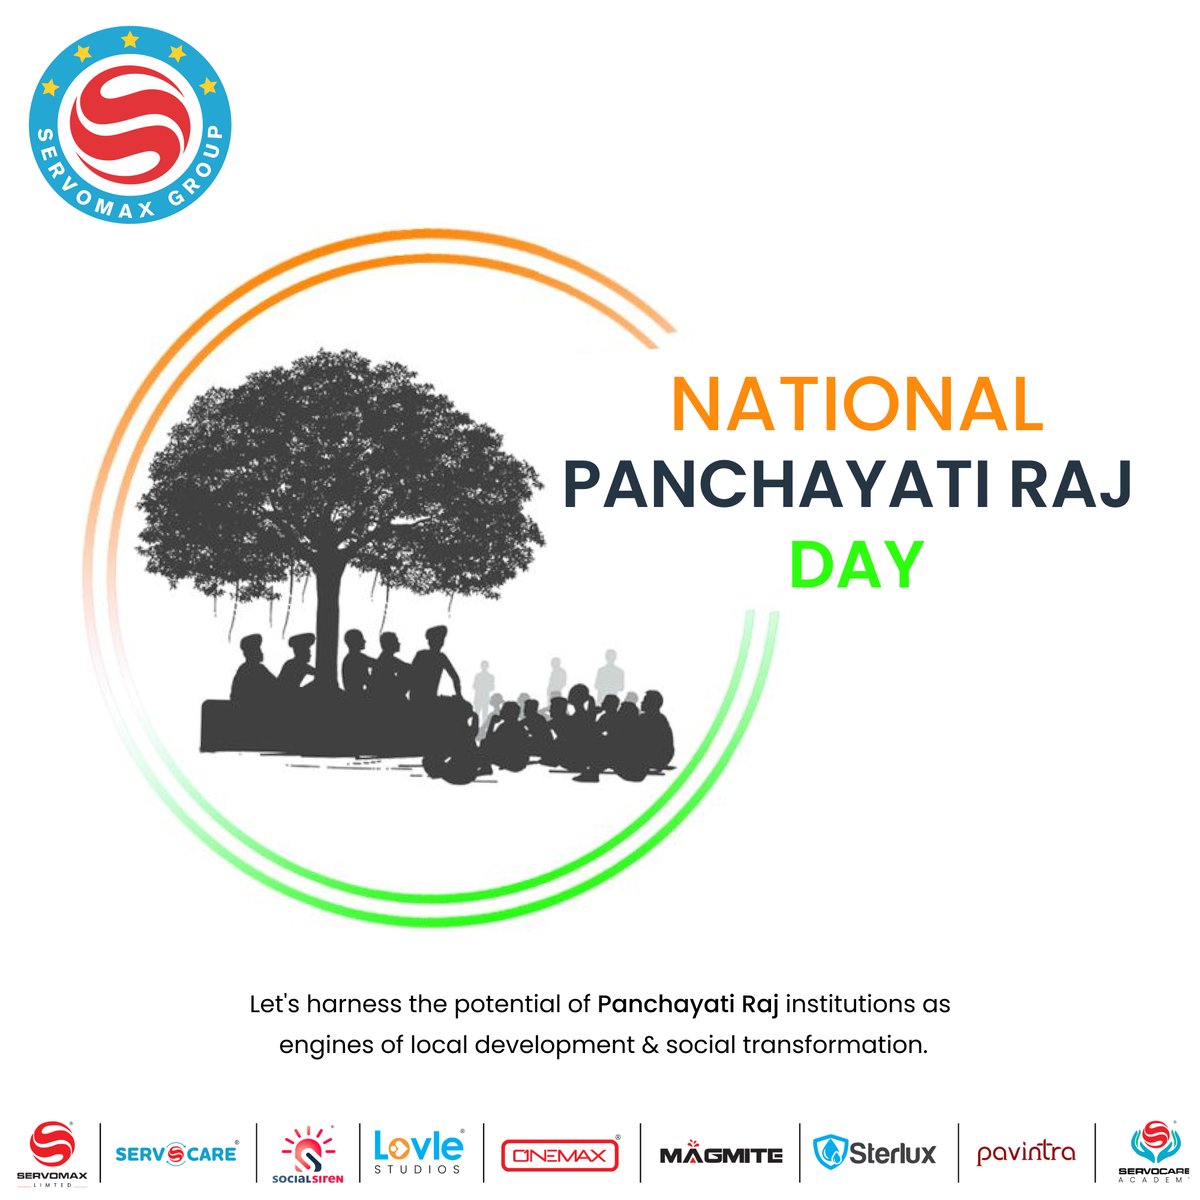 राष्ट्रीय पंचायती राज दिवस की शुभकामनाएं.

Wishing everyone a progressive National Panchayati Raj Day!

#NationalPanchayatiRajDay #PanchayatiRajDay #PanchayatiRajDay2024 #MoRD #MoPR #NPRD2024 #PanchayatForTomorrow #LocalSelfGovernance #RuralDevelopment

#SERVOCARE